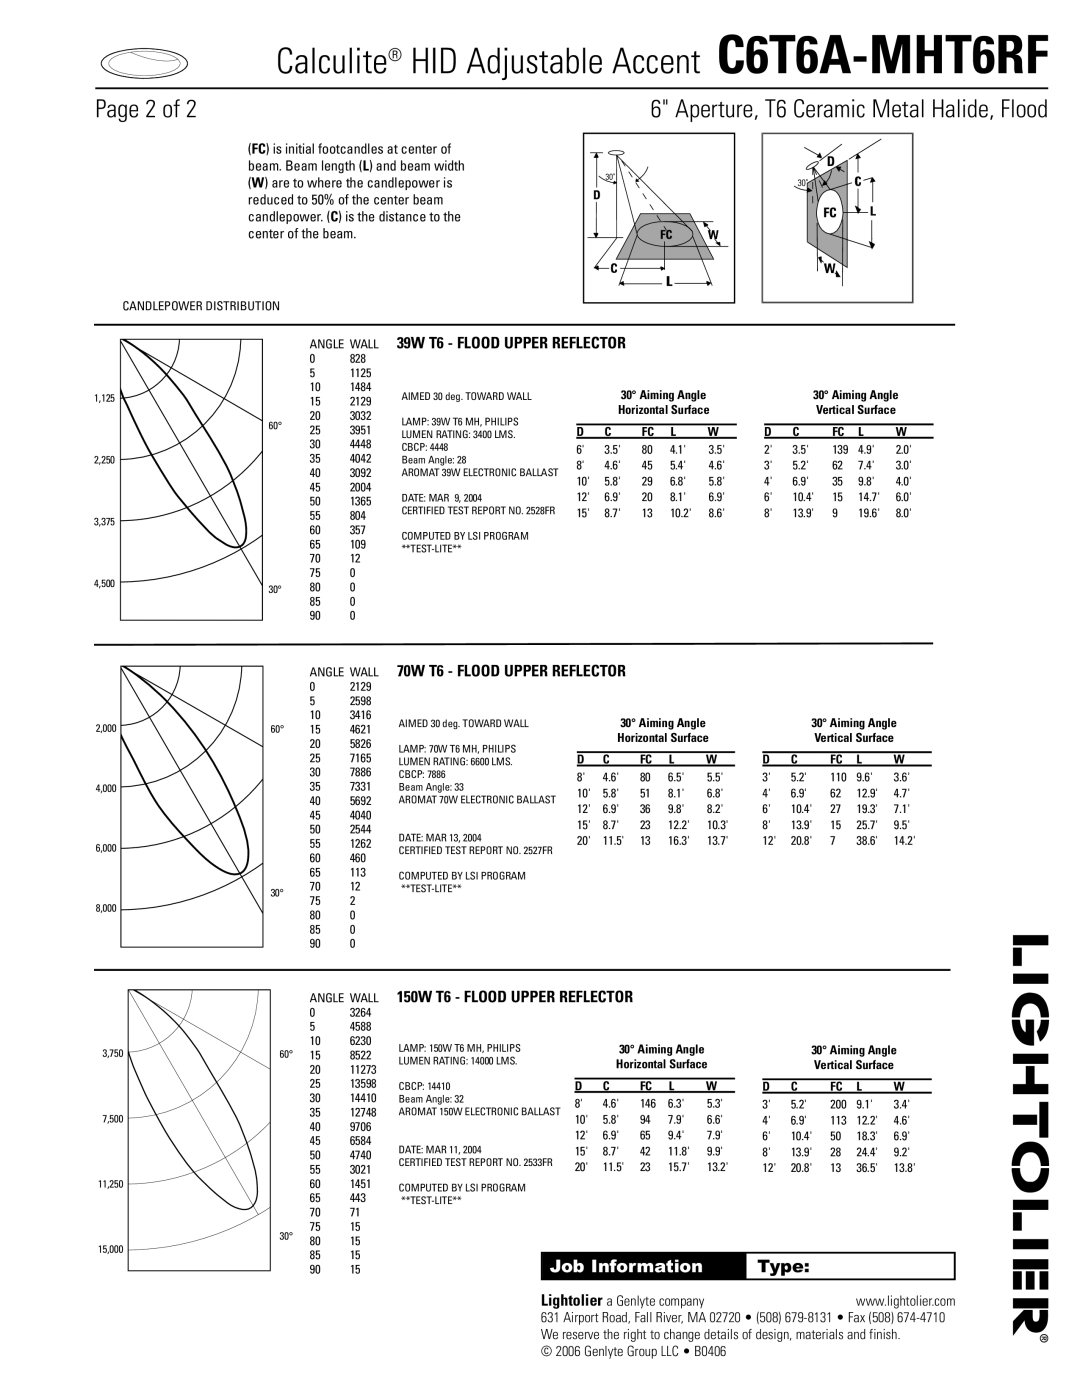 Lightolier Page 2 of, Calculite HID Adjustable Accent C6T6A-MHT6RF, Aperture, T6 Ceramic Metal Halide, Flood, Type 